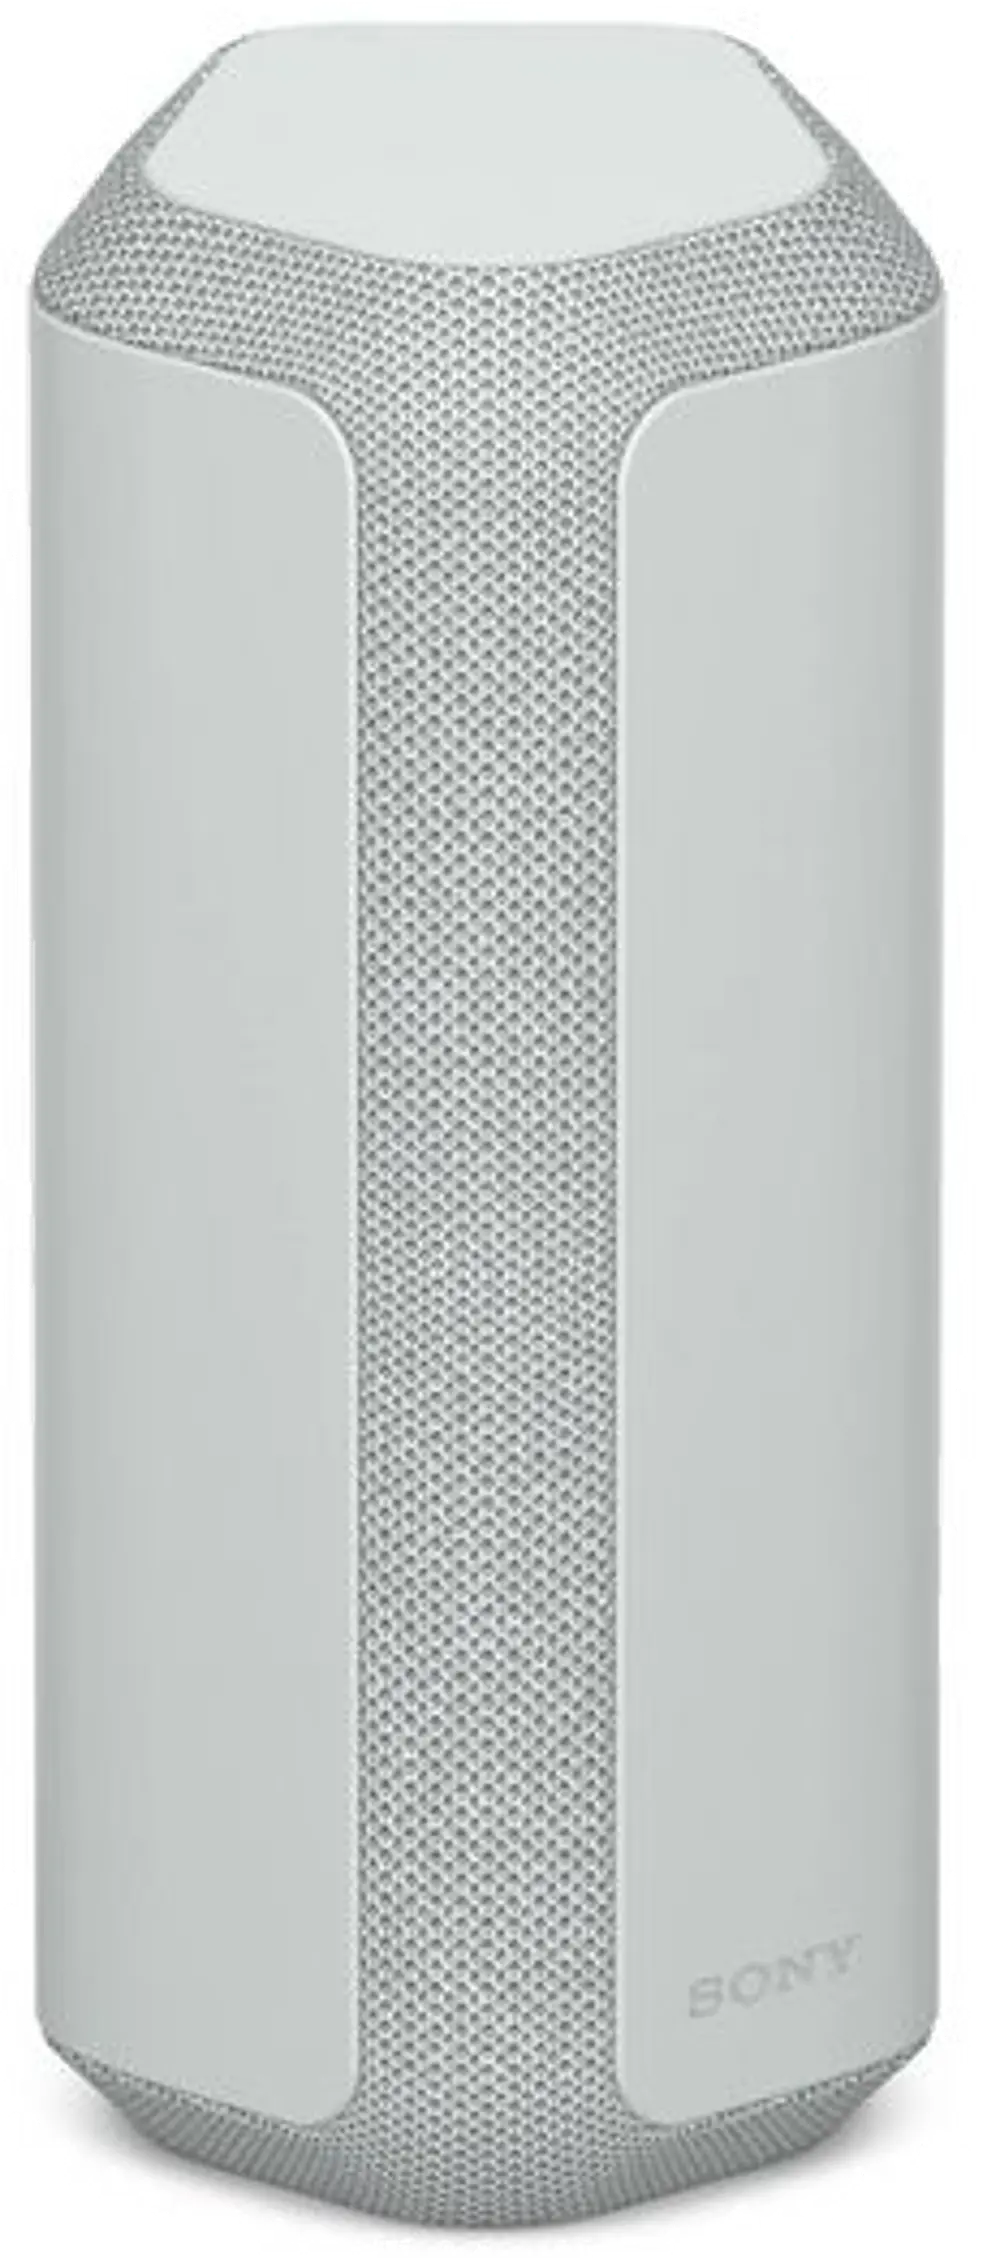 SRSXE300/H LIGHT GRAY Sony SRSXE300 Portable X-Series Bluetooth Speaker - Gray-1